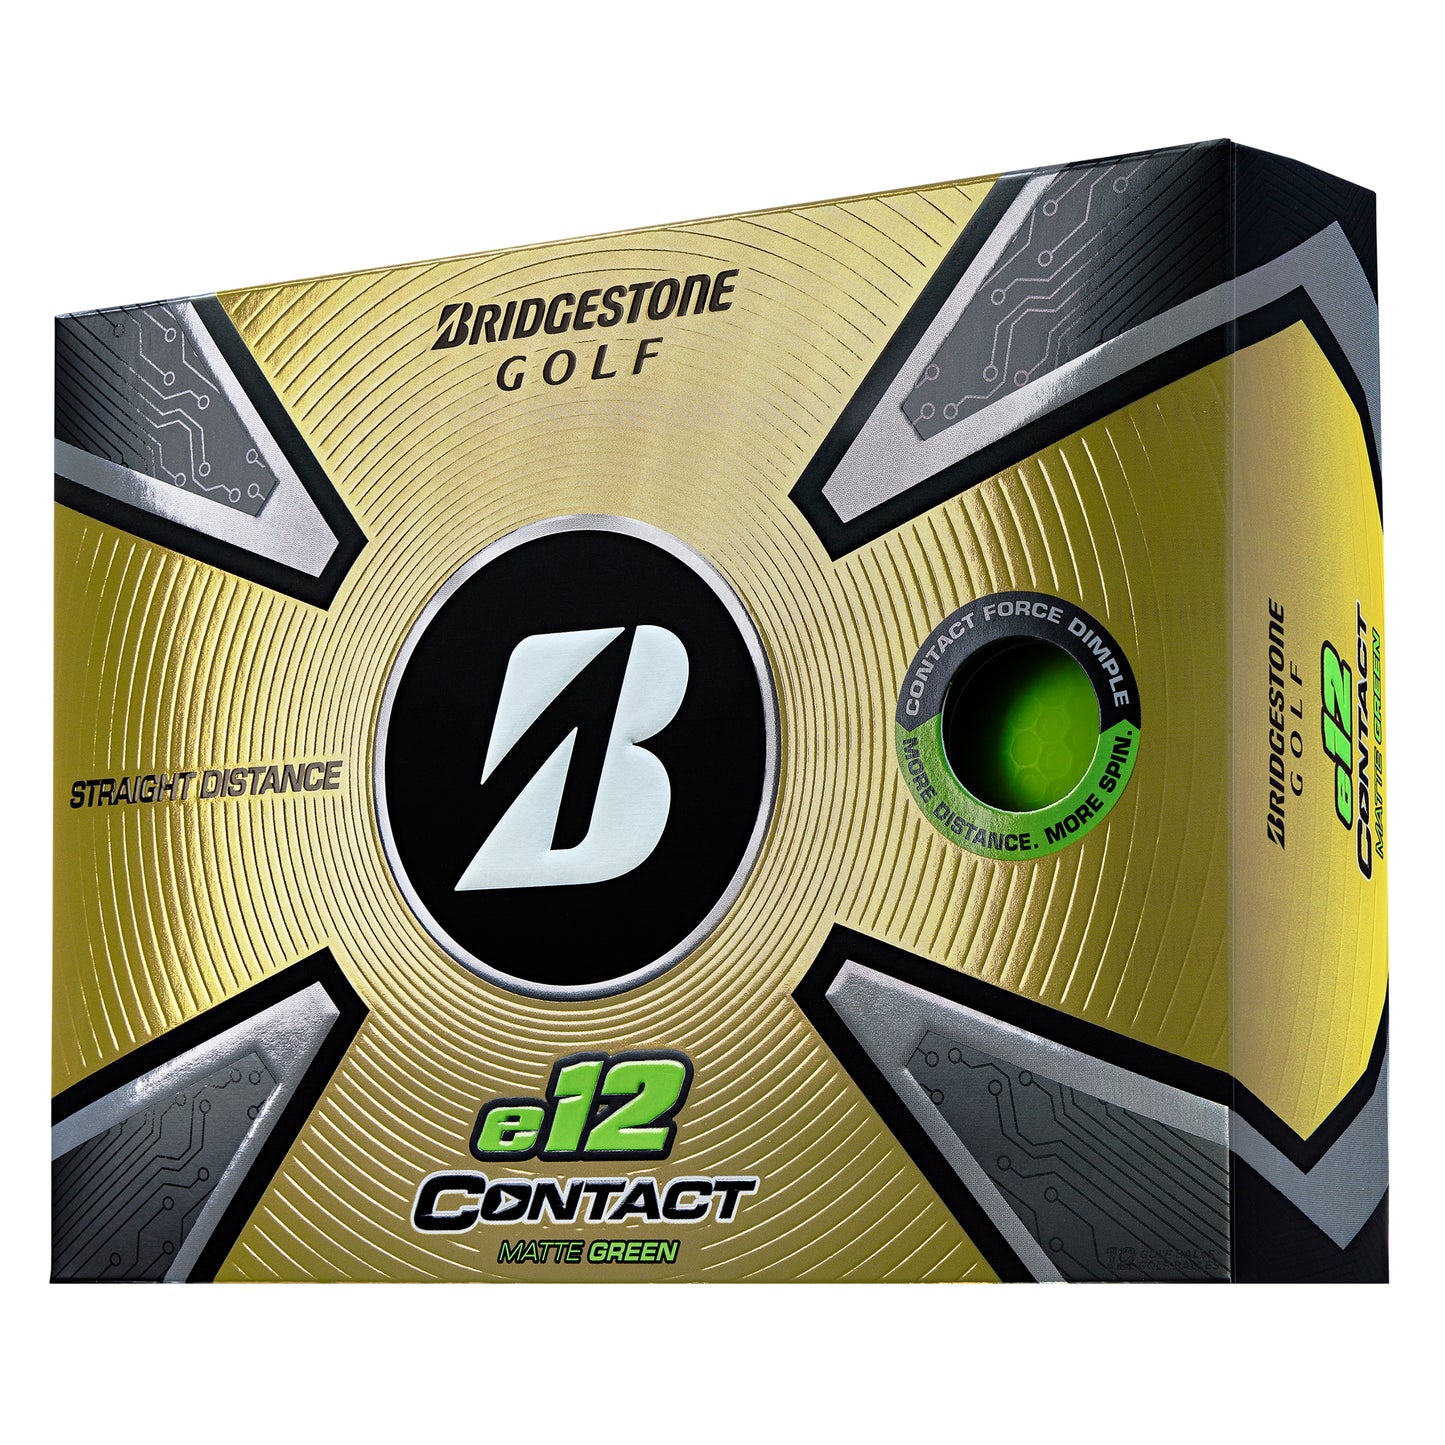 Bridgestone E12 Contact Golf Balls - Matte Green   